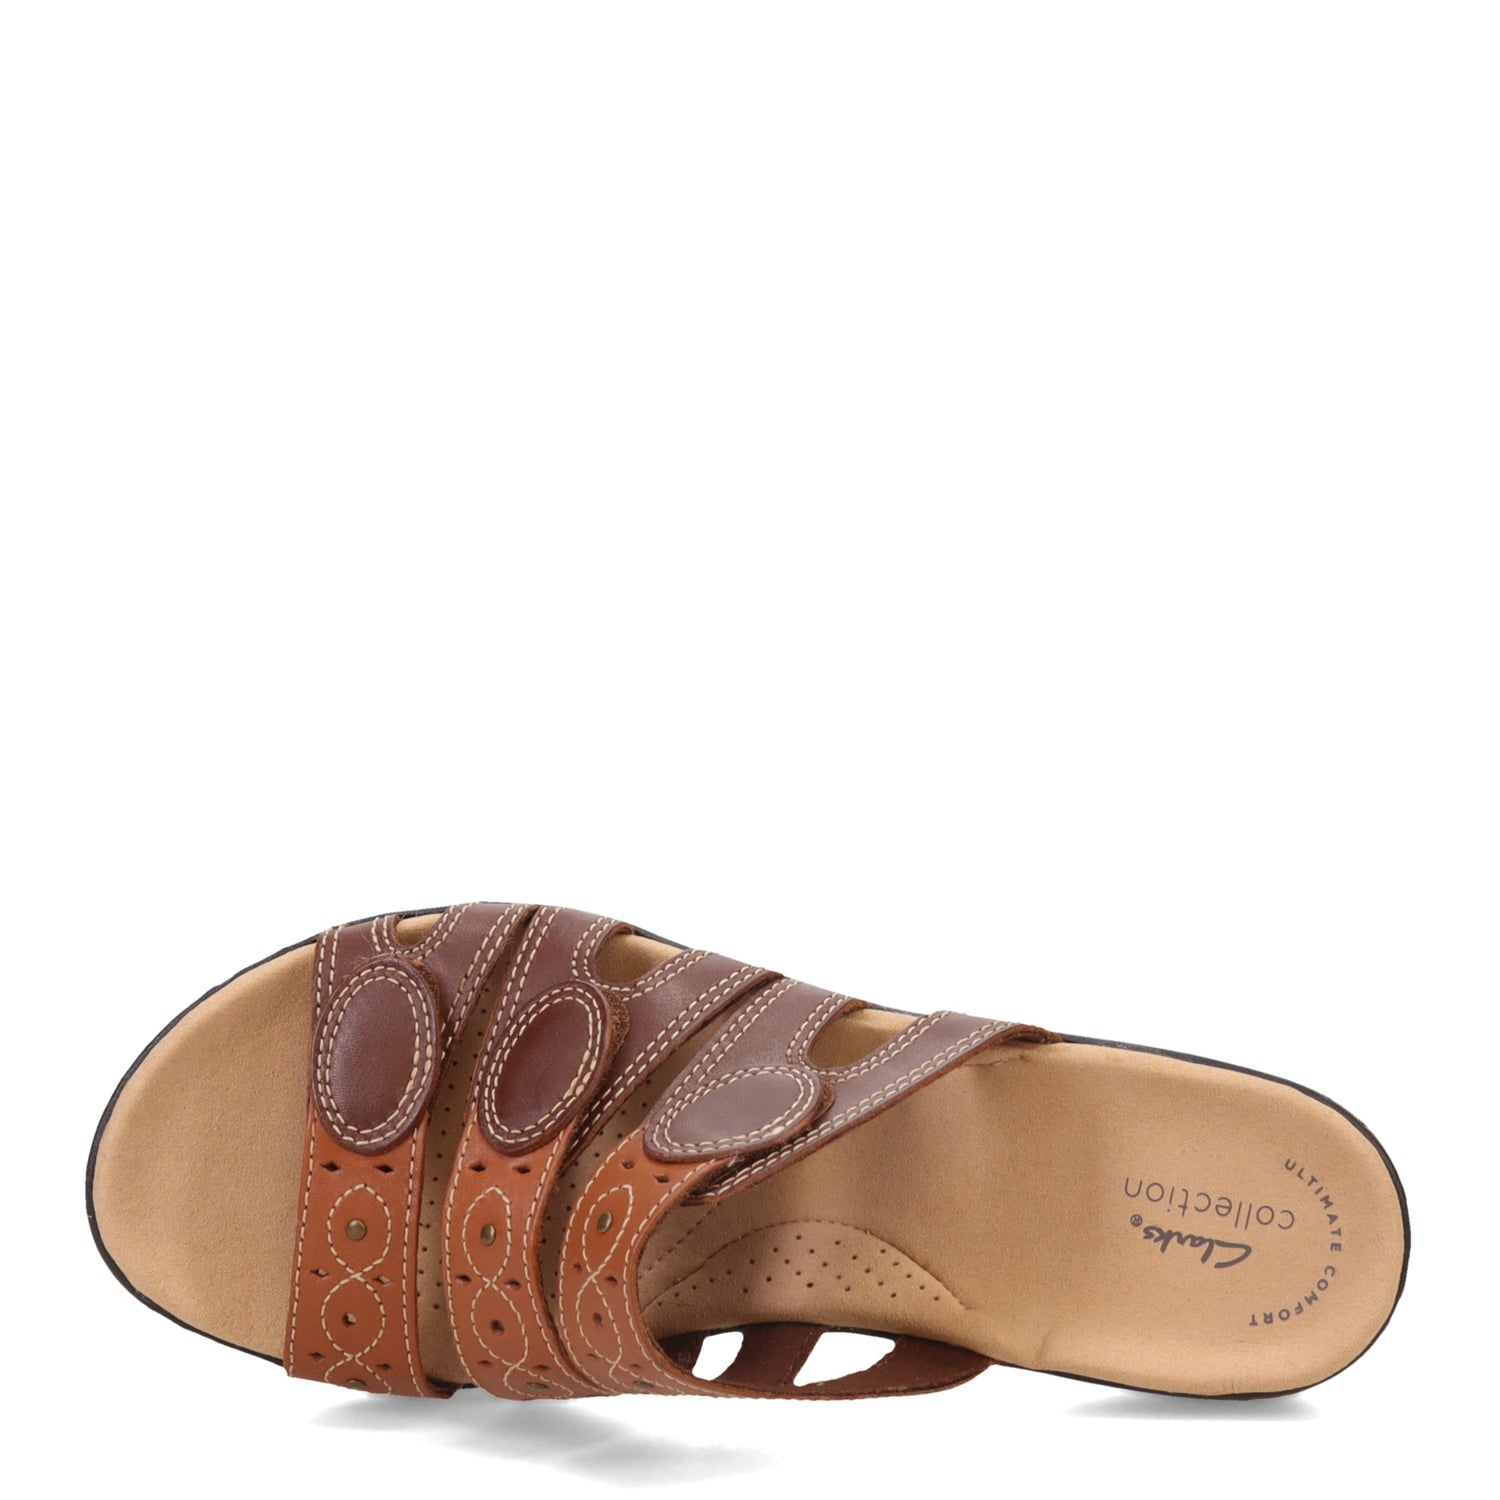 Peltz Shoes  Women's Clarks Leisa Cacti Sandal BROWN 26117619